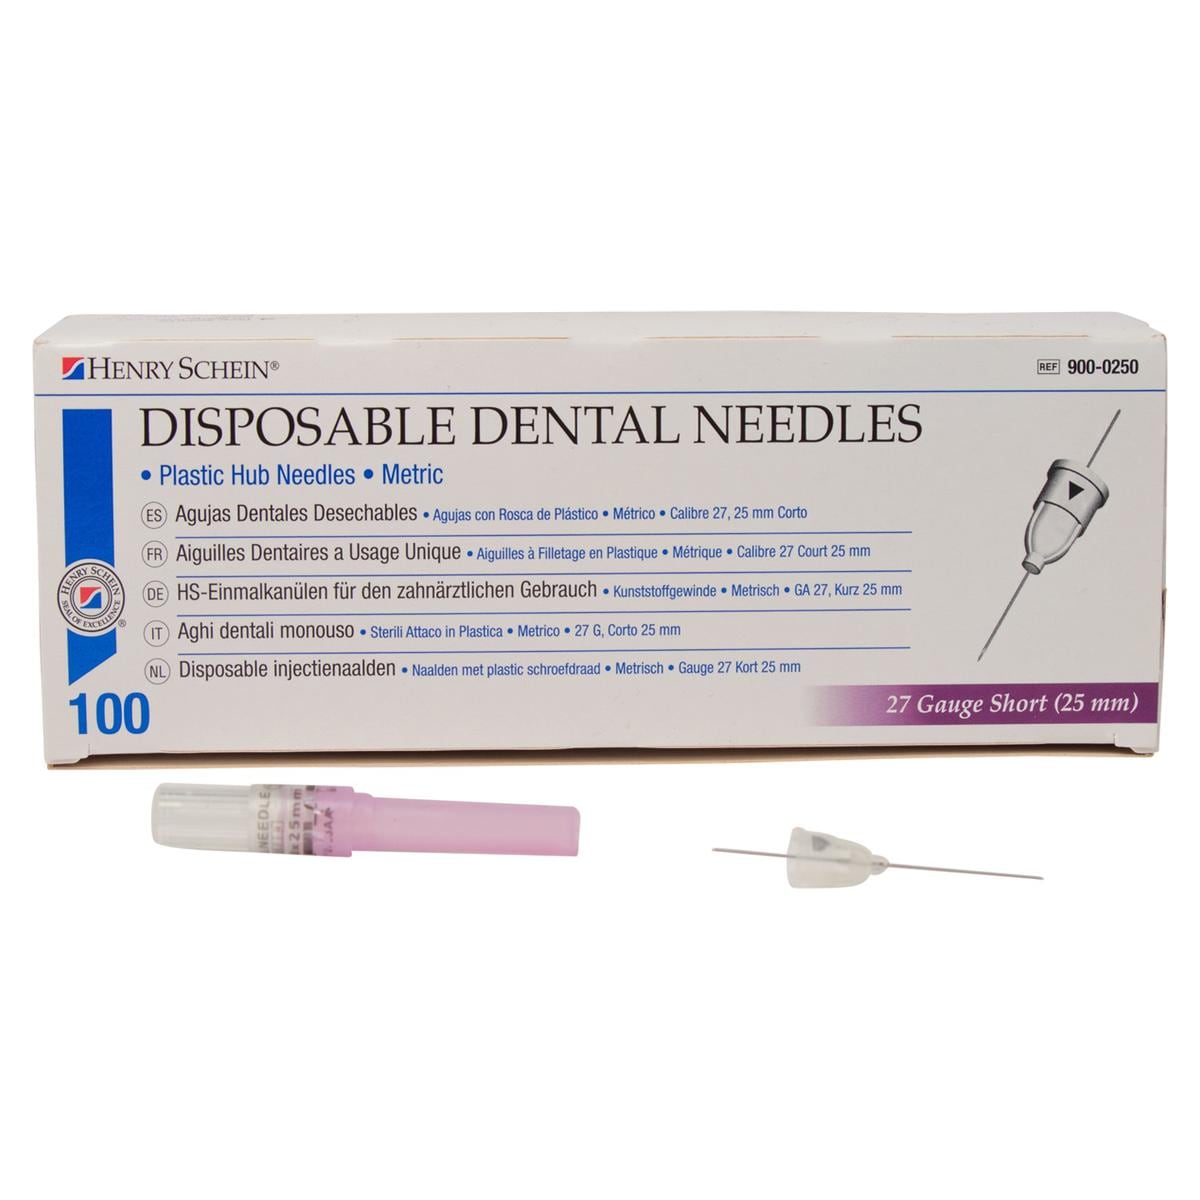 HS-Injektionskanülen, Disposable Dental Needles - Violett - 27G, 0,4 x 25 mm, kurz, Packung 100 Stück